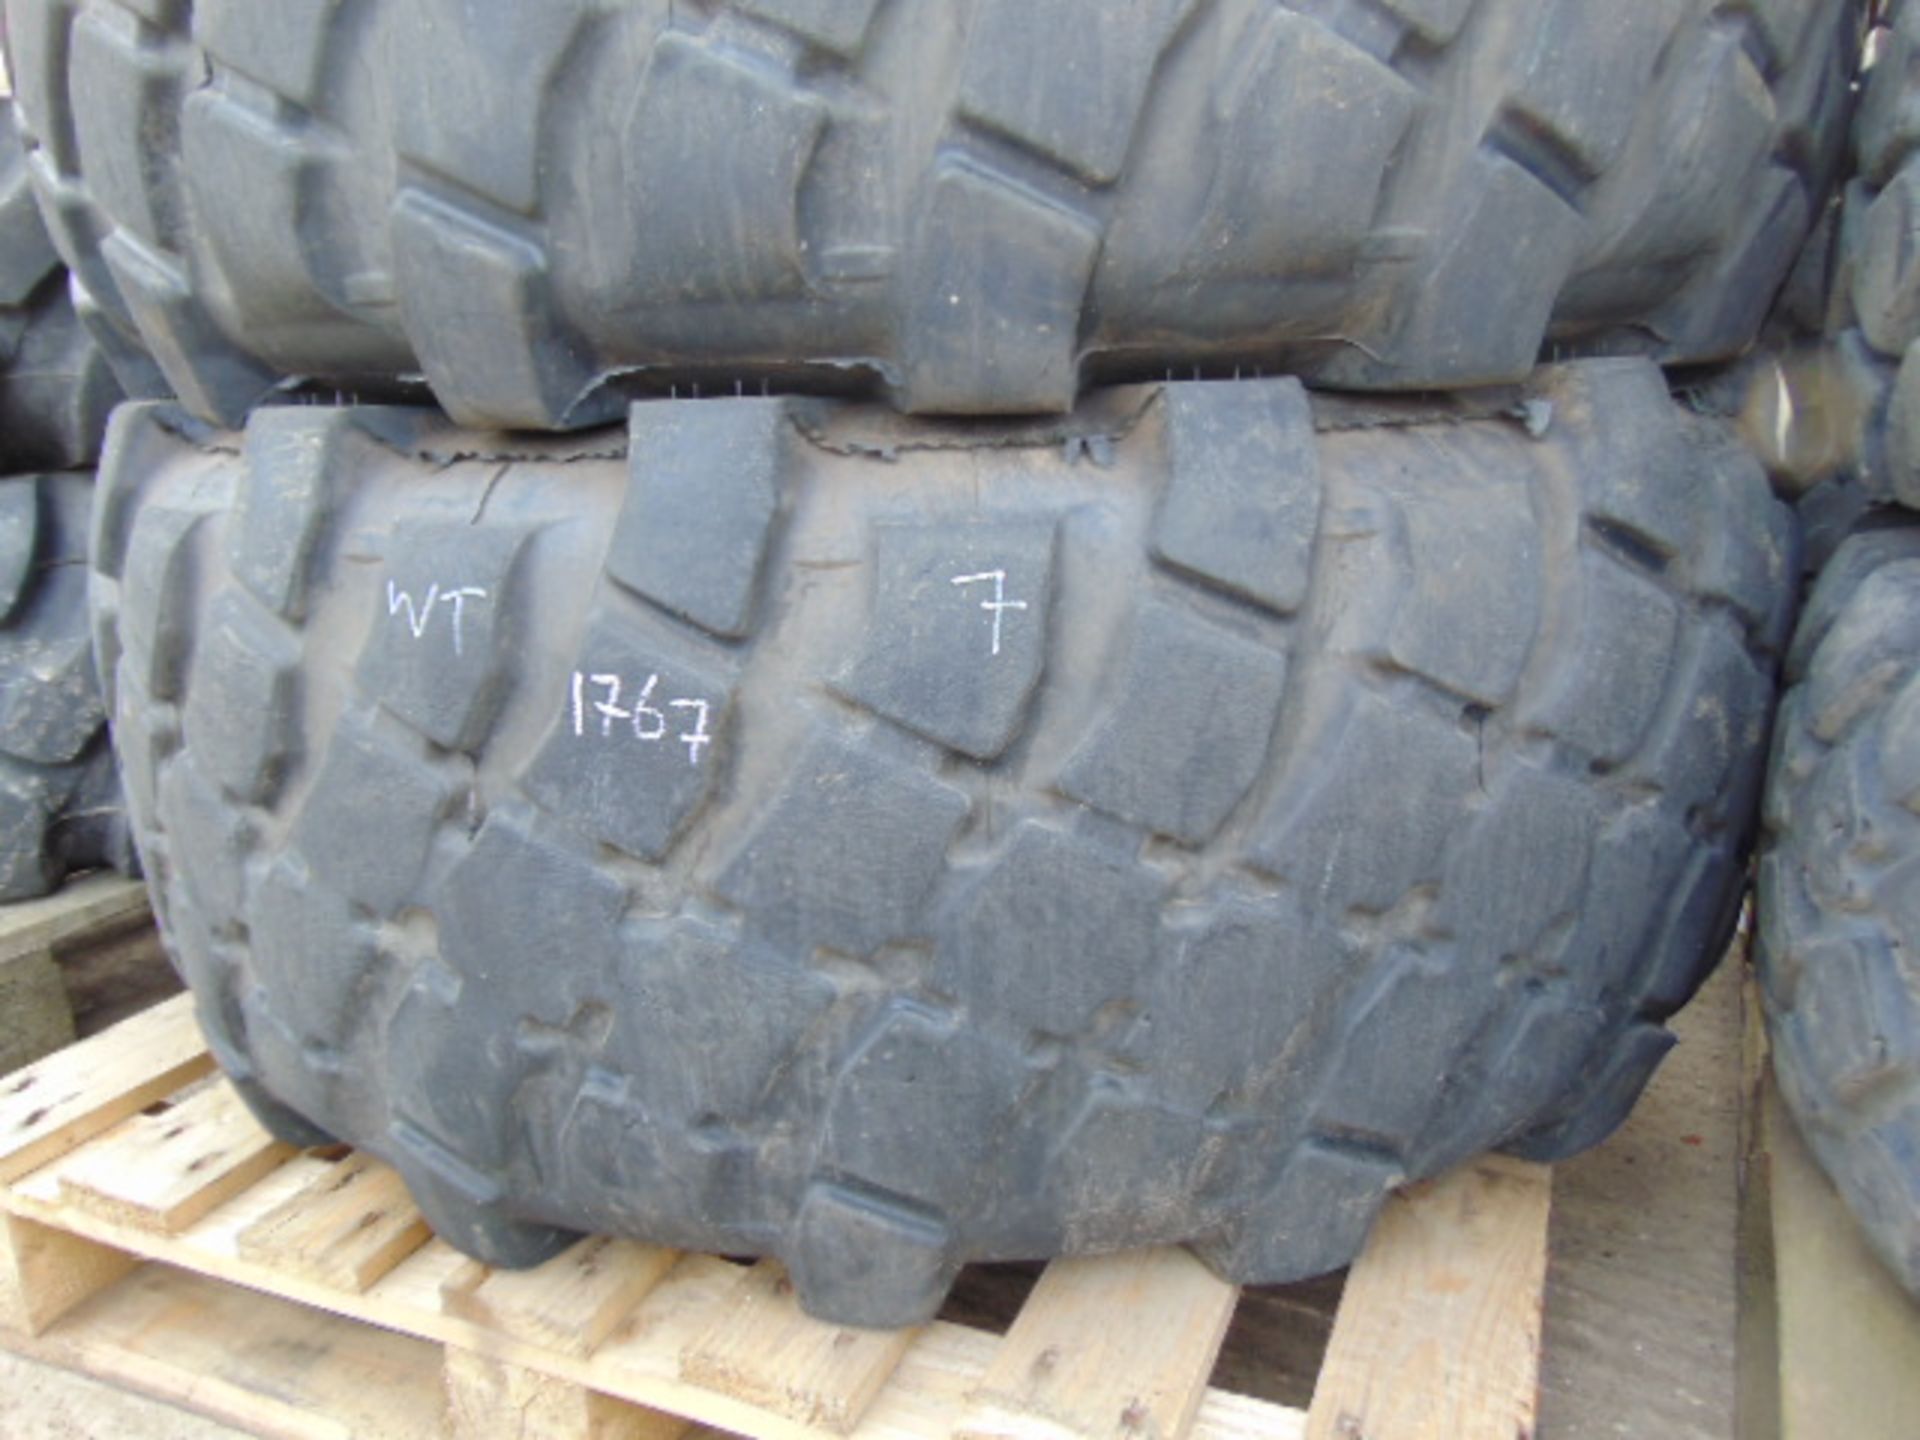 3 x Michelin XML 475/80 R20 Tyres - Image 3 of 6